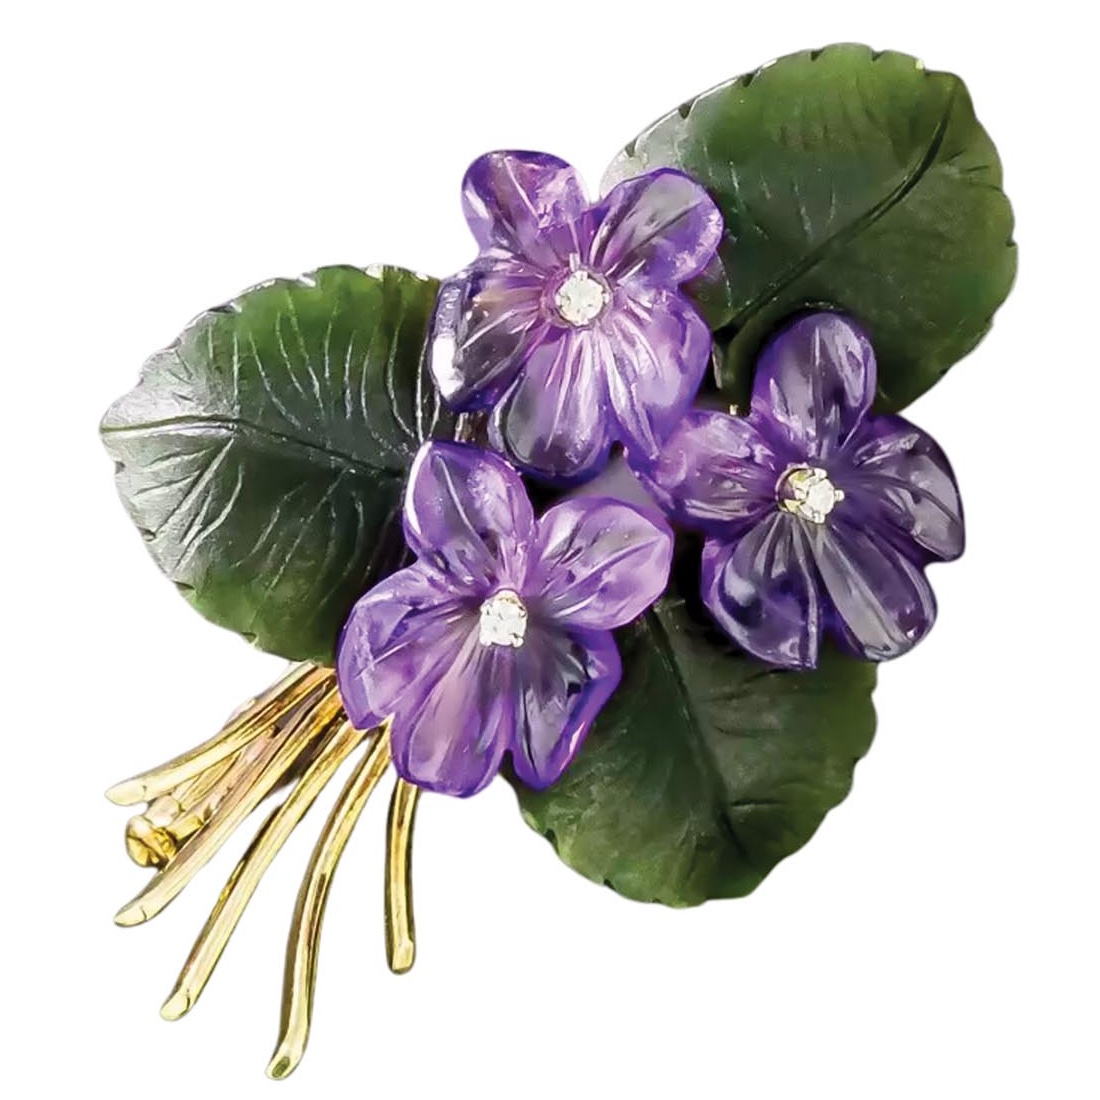 A brooch made of purple flowers.